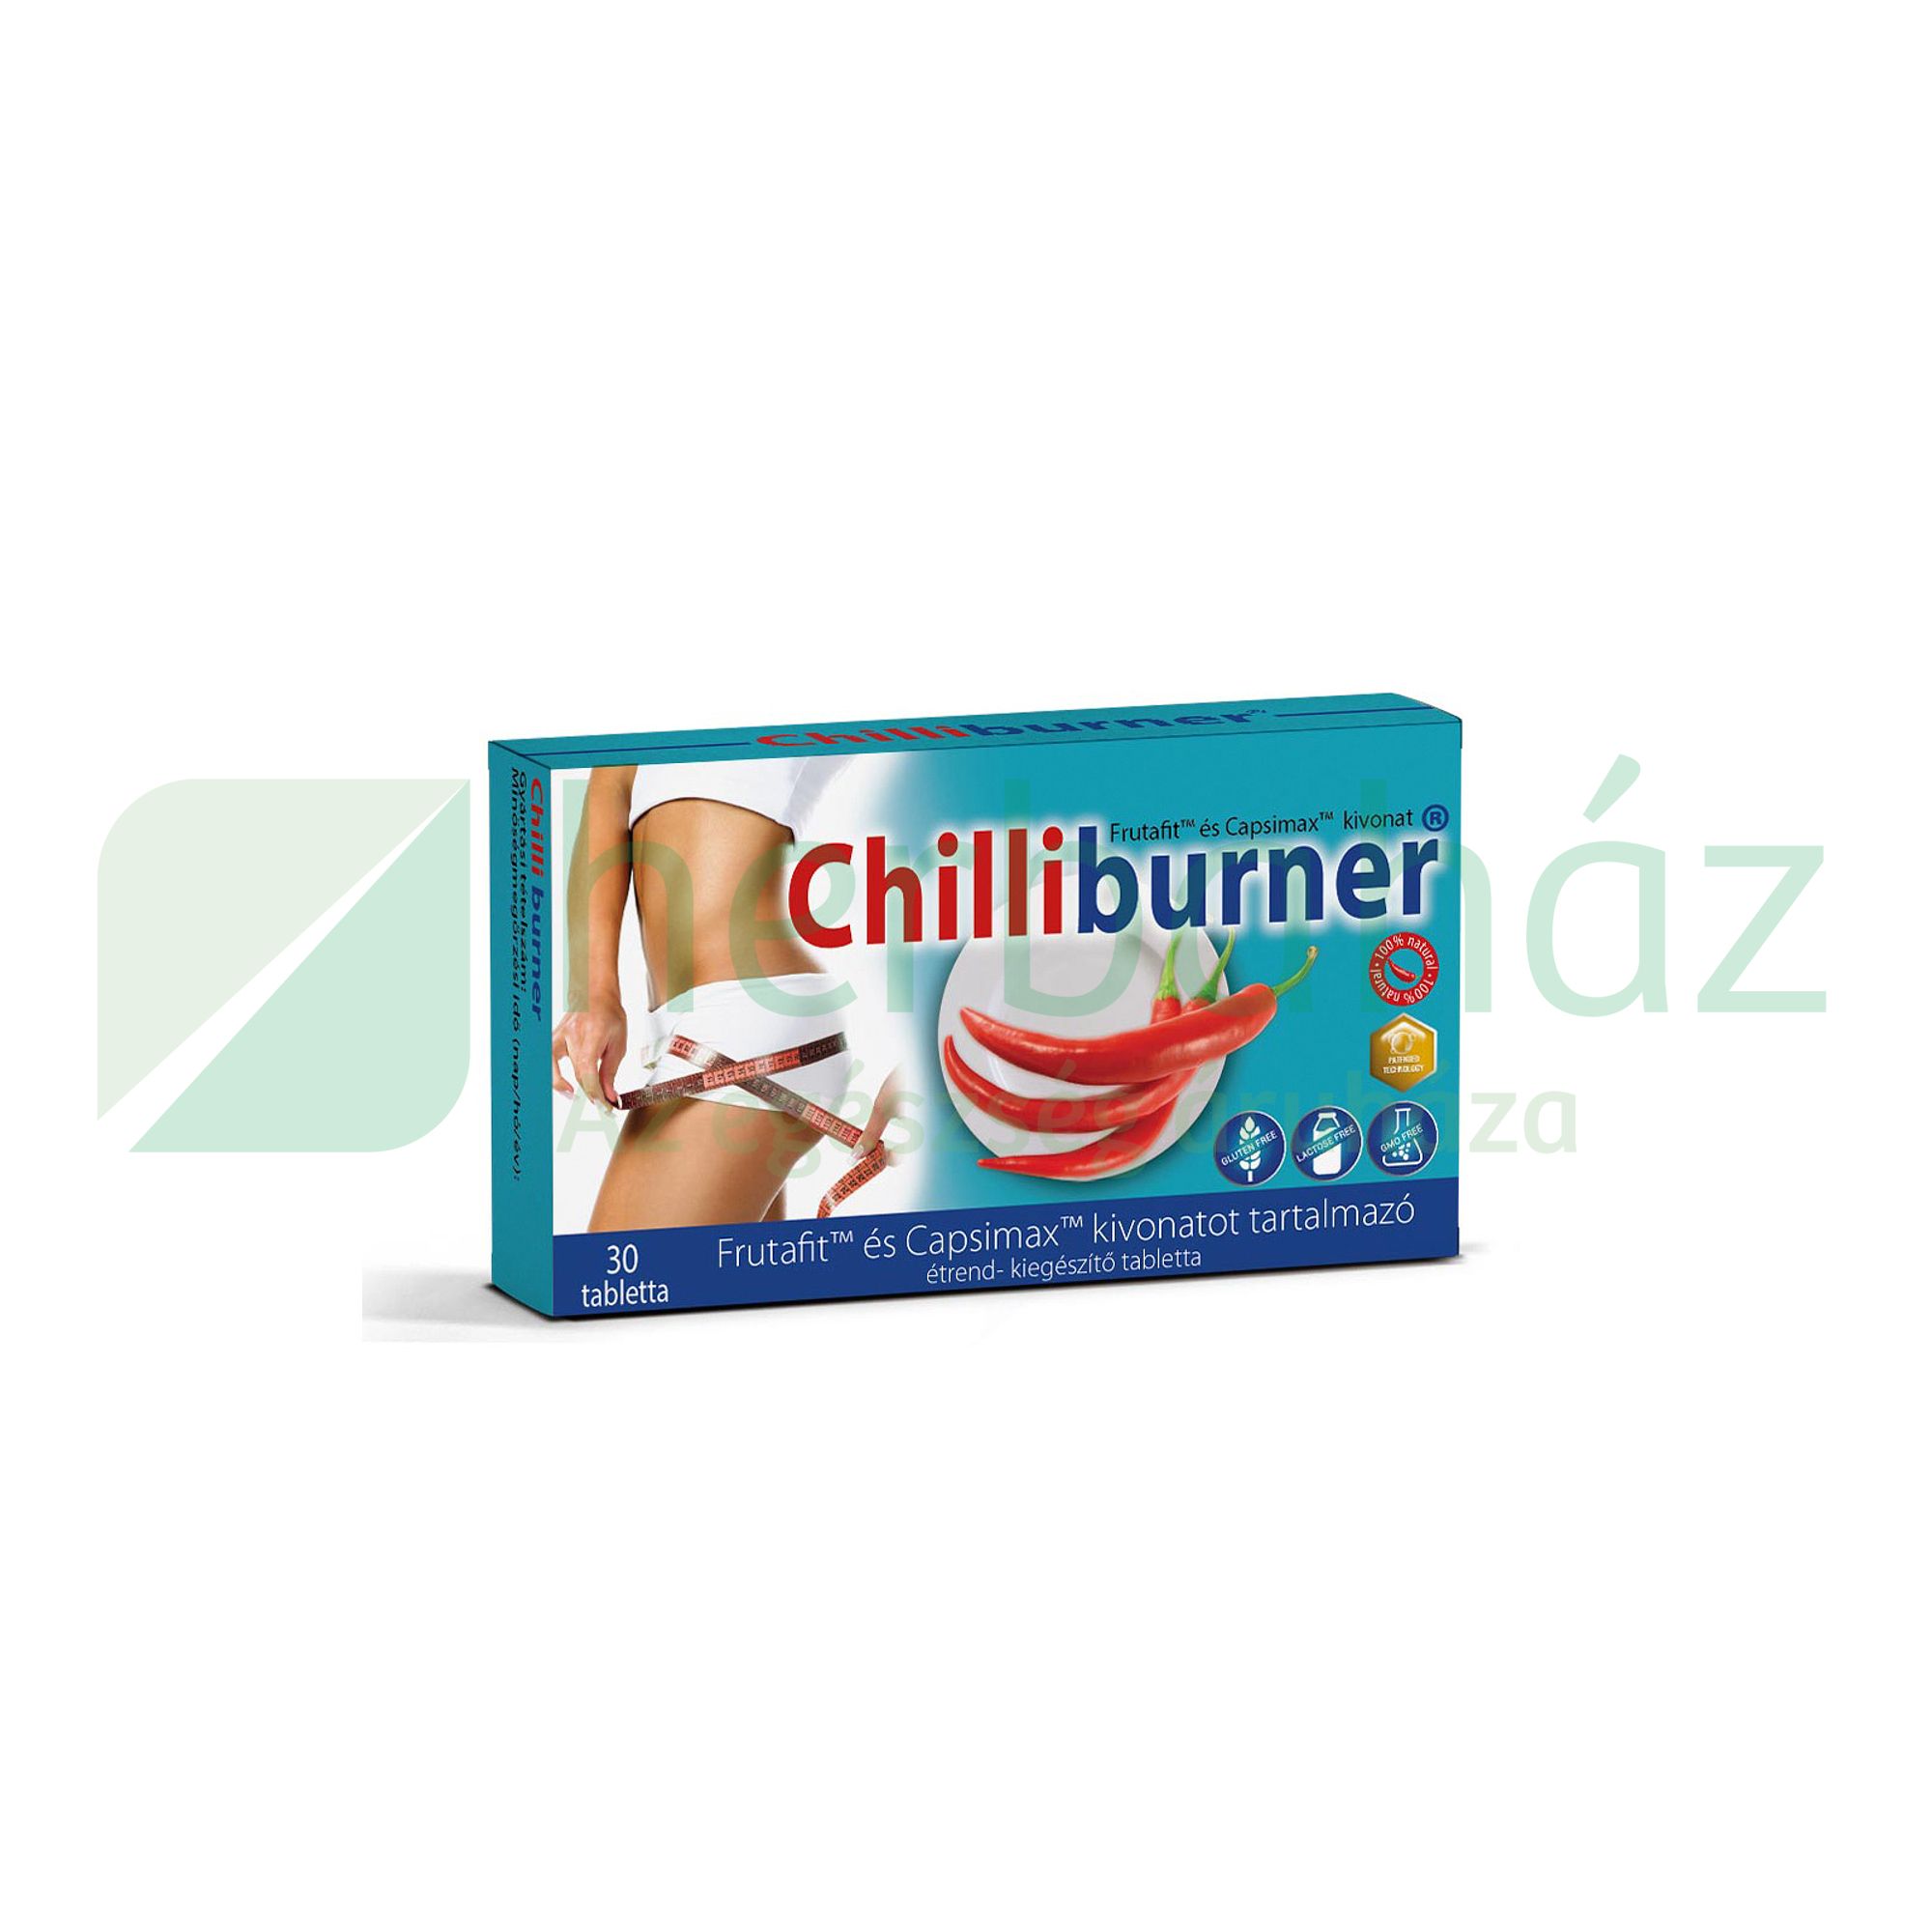 Chilliburner tabletta 30 db